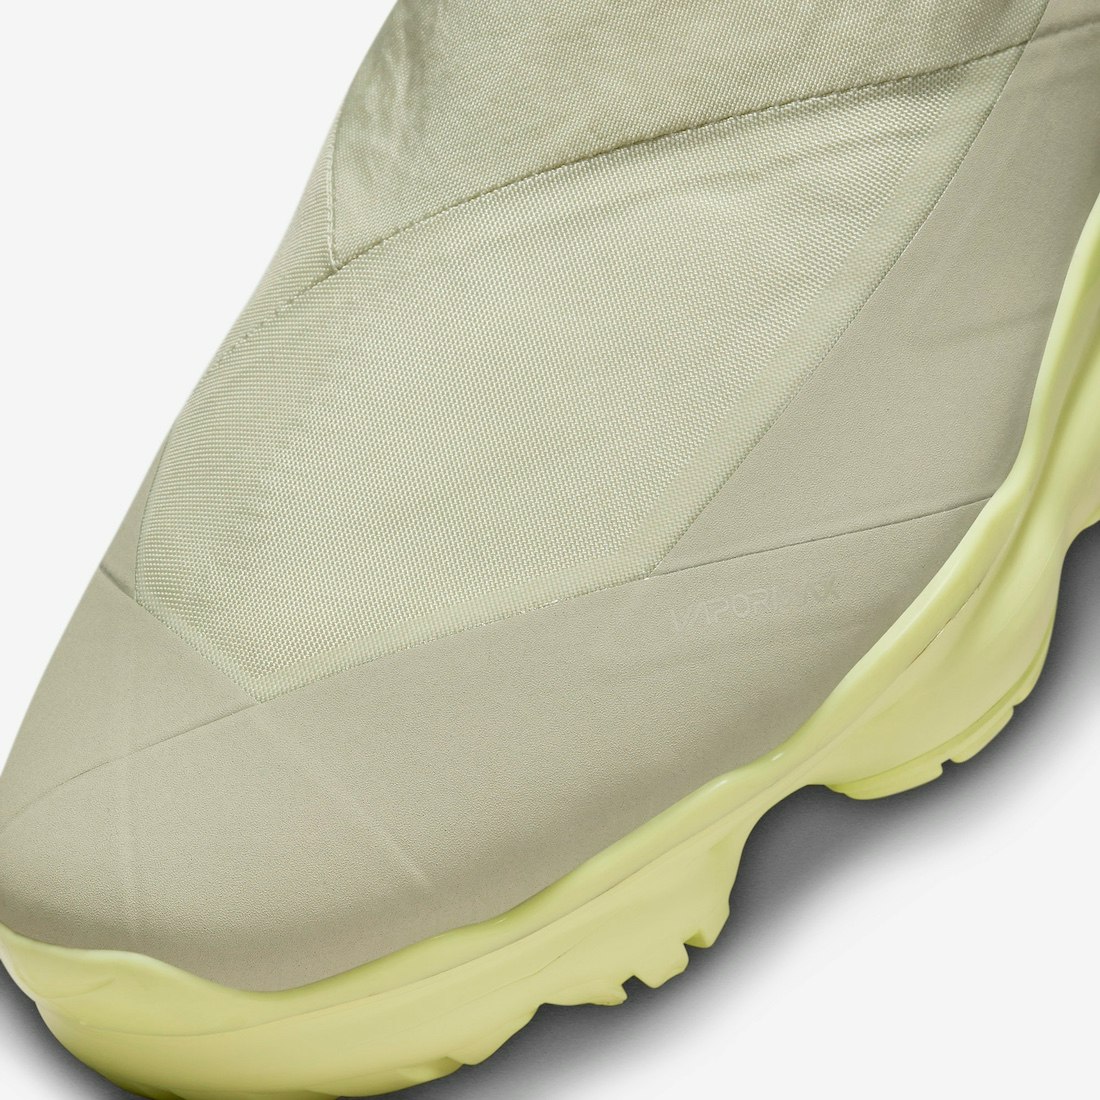 Nike Air VaporMax Moc Roam "Light Stone"